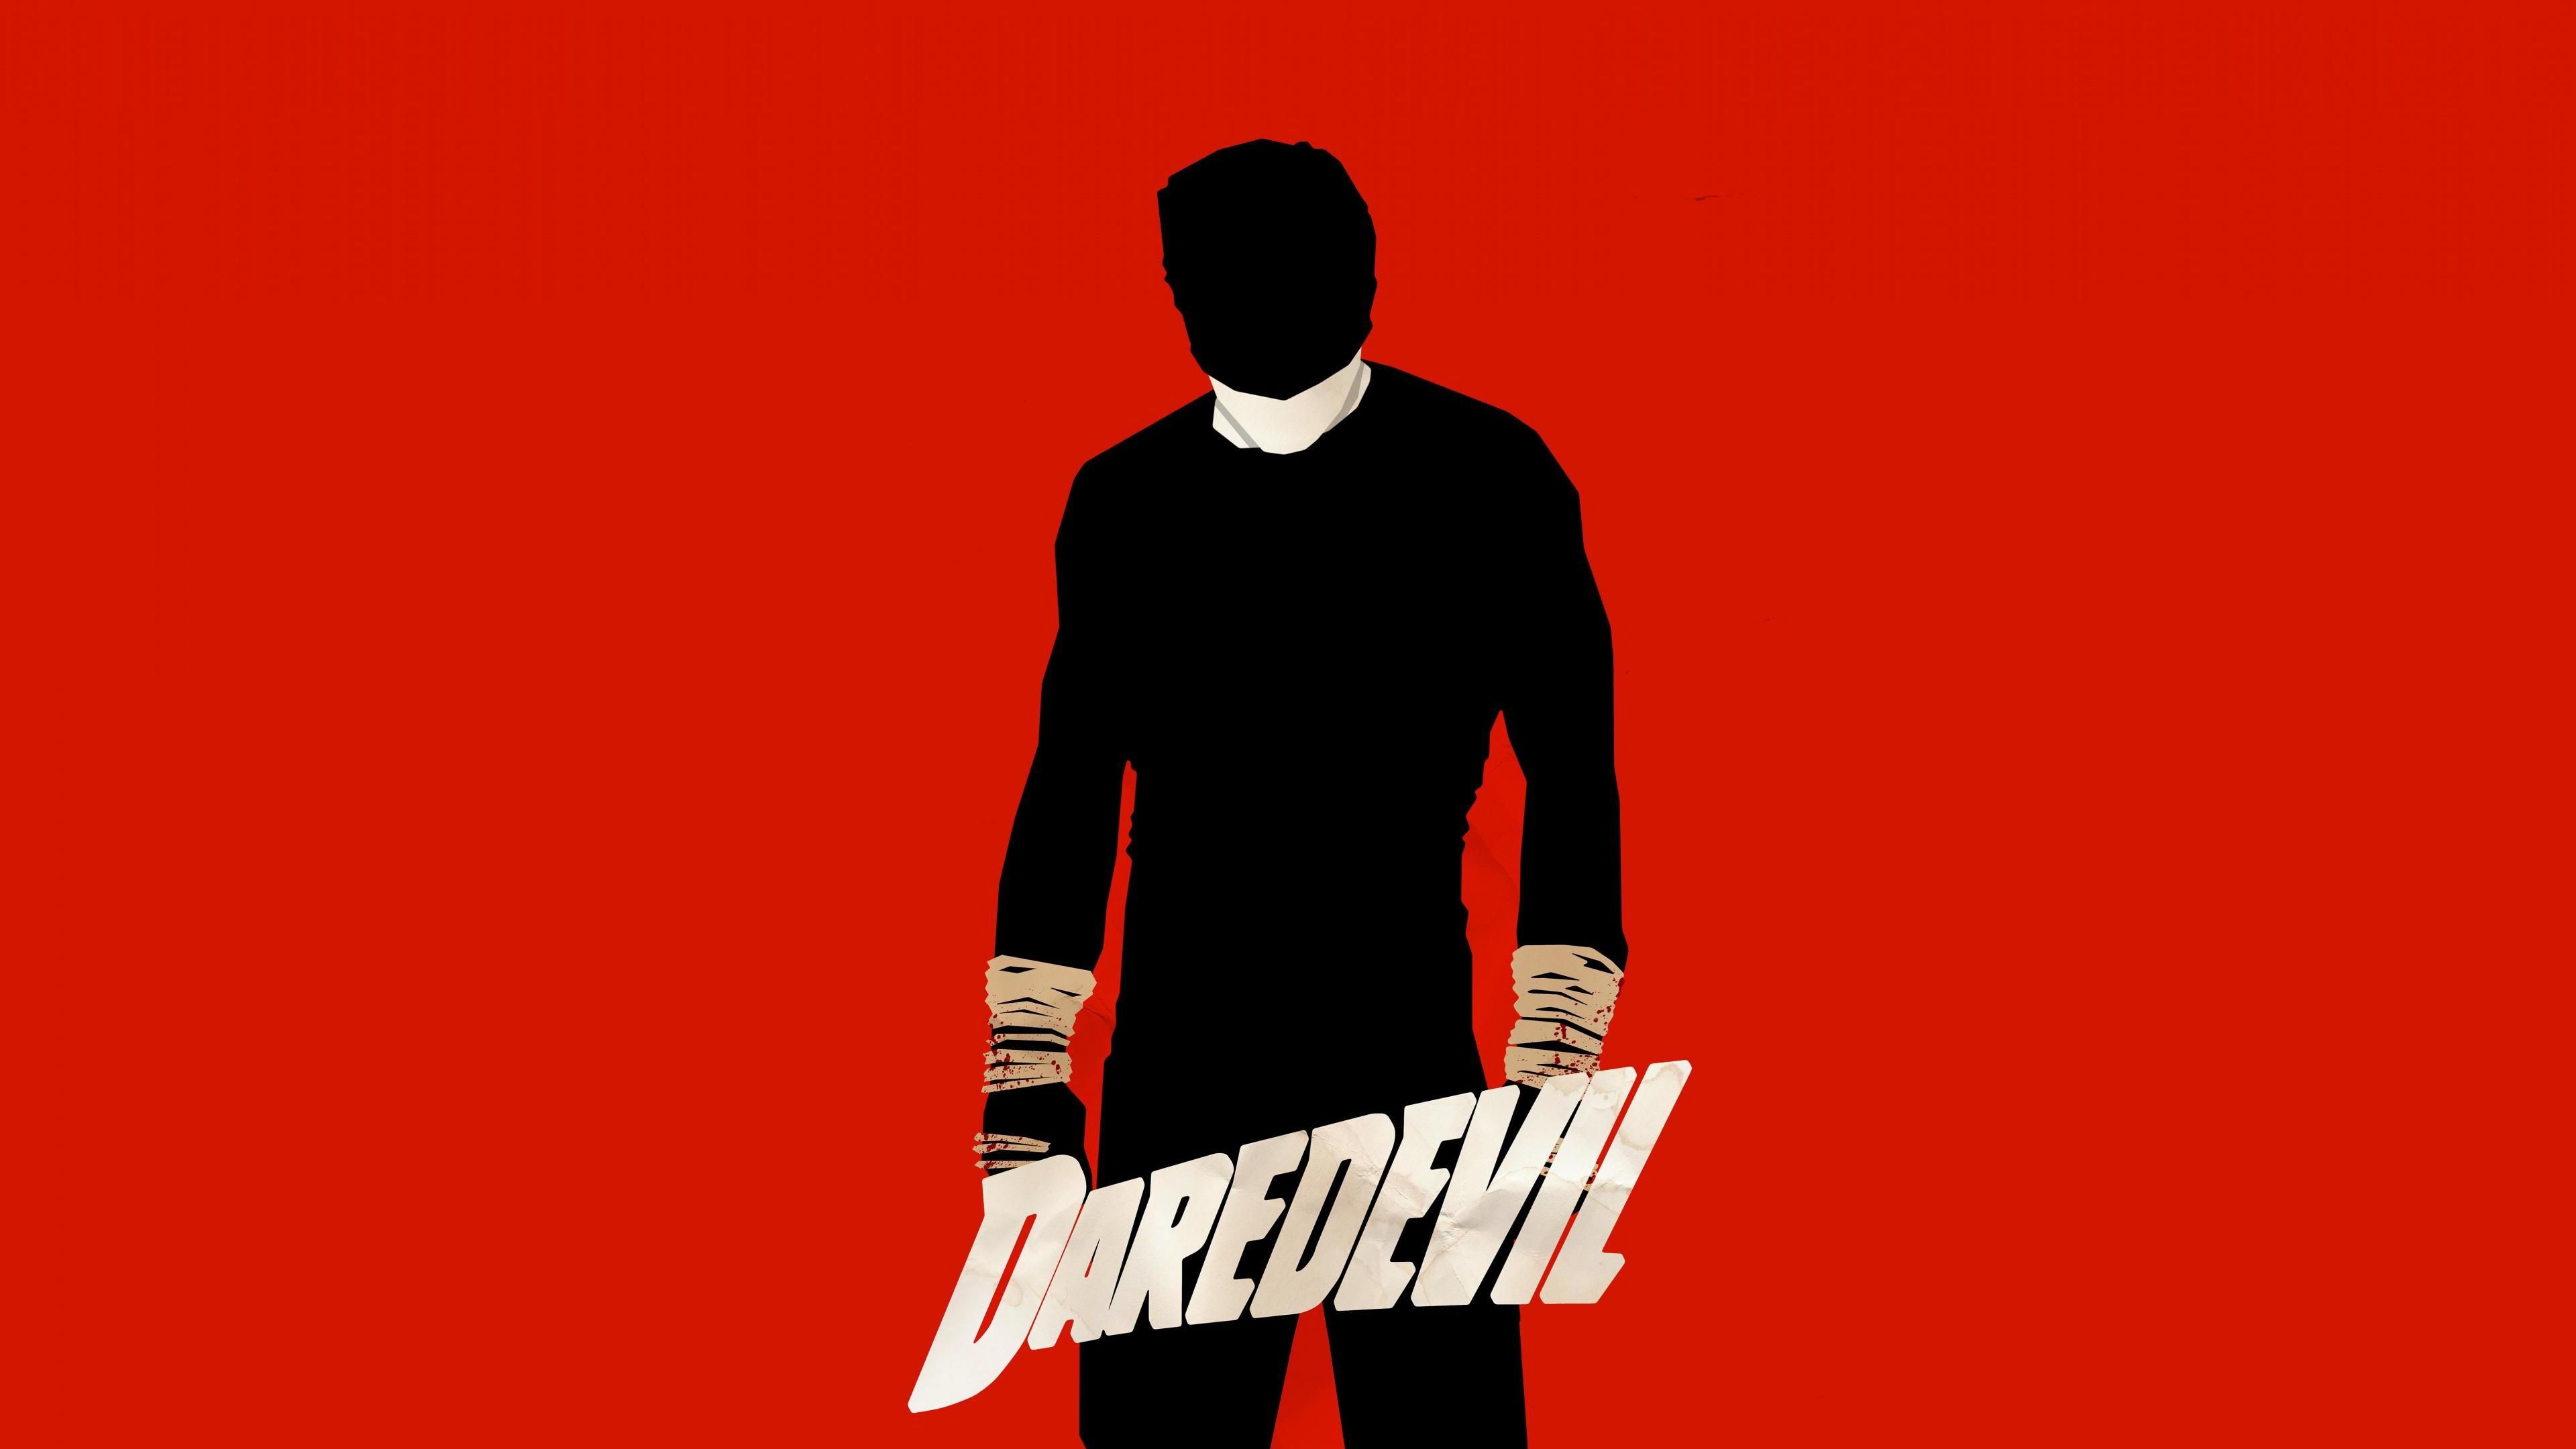 Daredevil Abstract Art 4k superheroes wallpaper, digital art wallpaper, daredevil wallpaper, artwork wallpa. Daredevil, Superhero wallpaper, Marvel superheroes